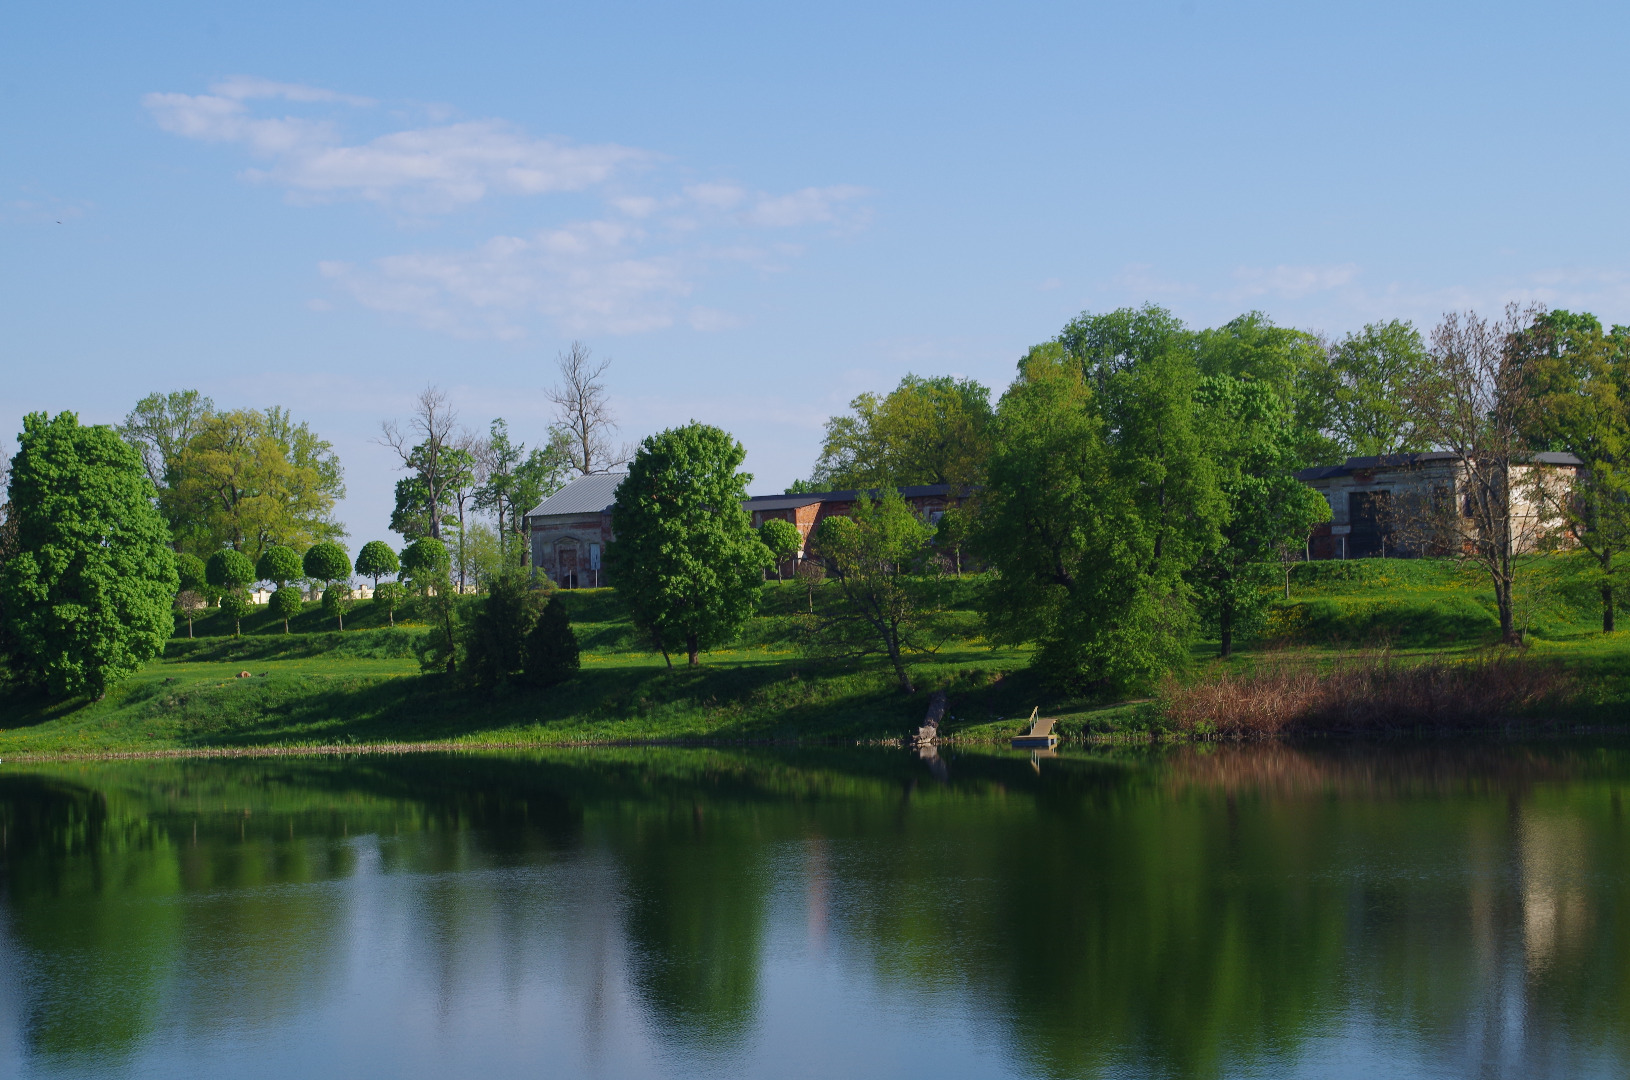 Estonian National Museum and Raadi Manor, view of the water body rephoto